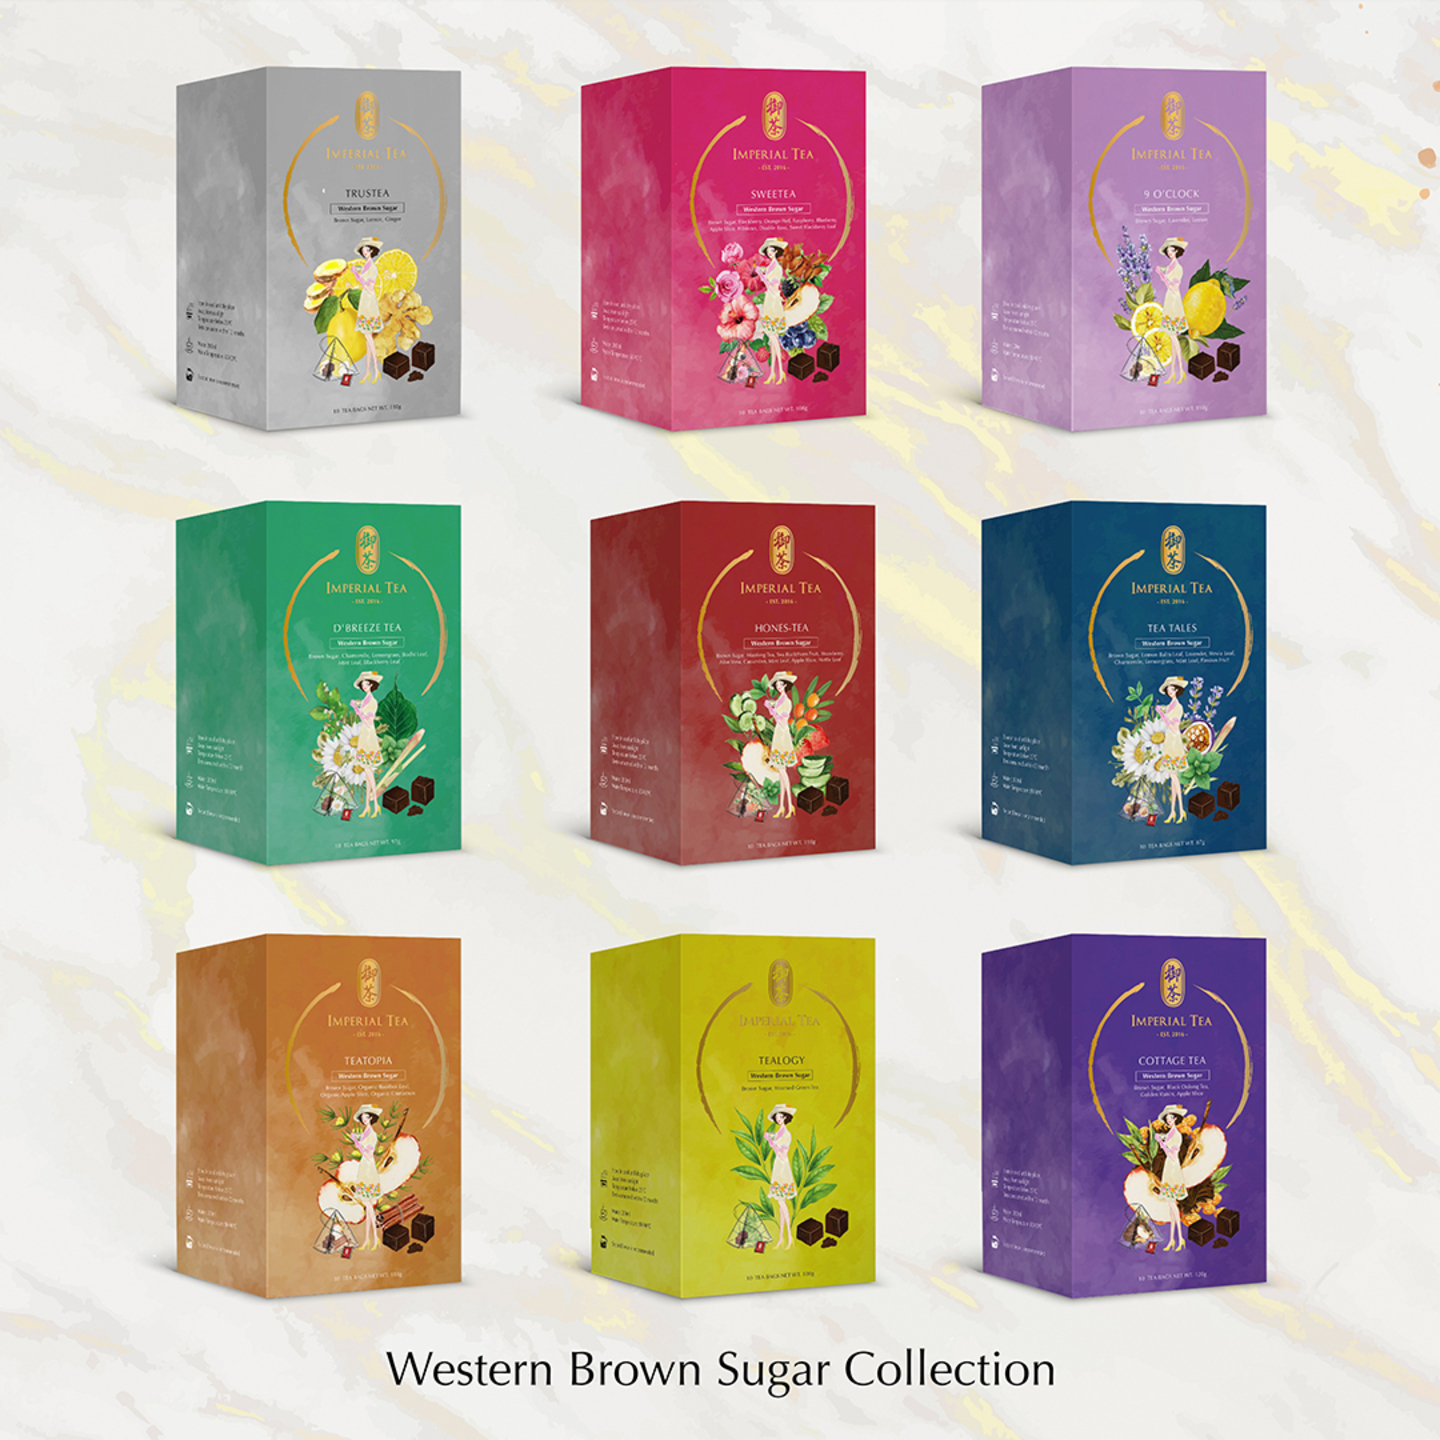 Imperial Tea 御茶 Western Brown Sugar Collection 西式红糖茶系列